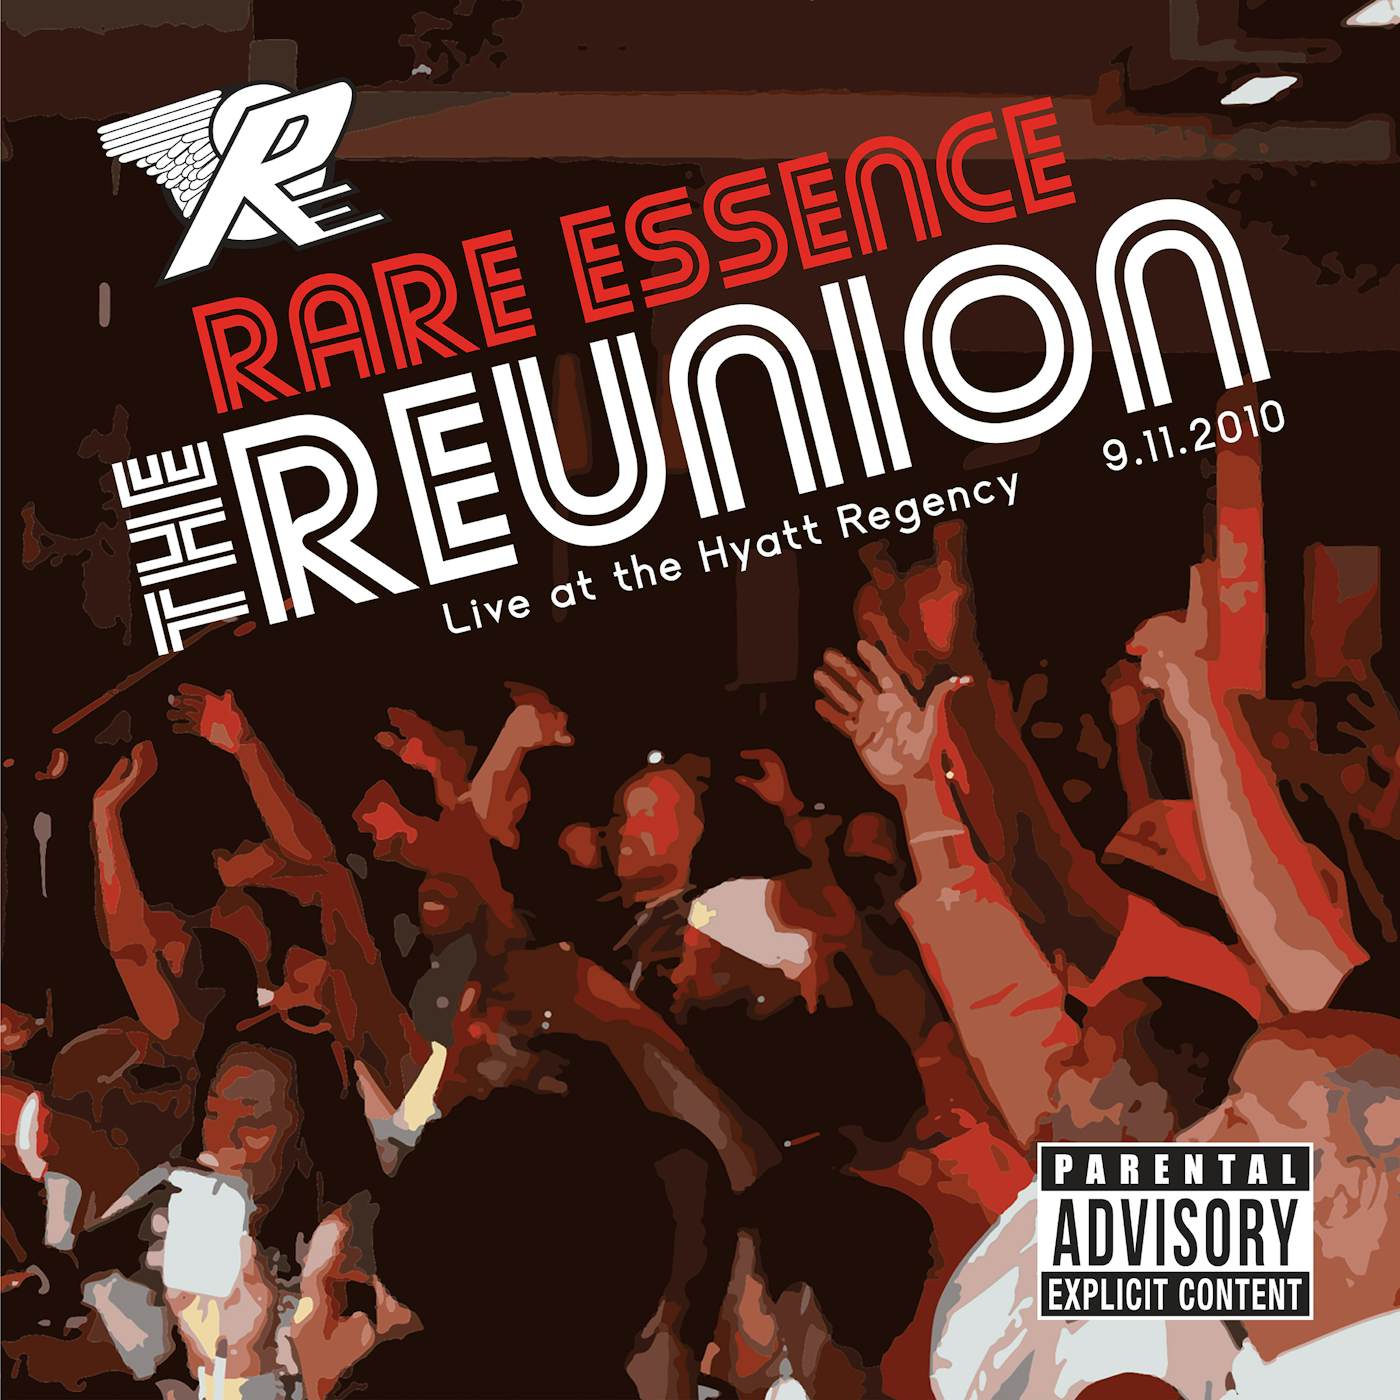 Rare Essence REUNION: LIVE AT THE HYATT REGENCY 9-11-2010 CD